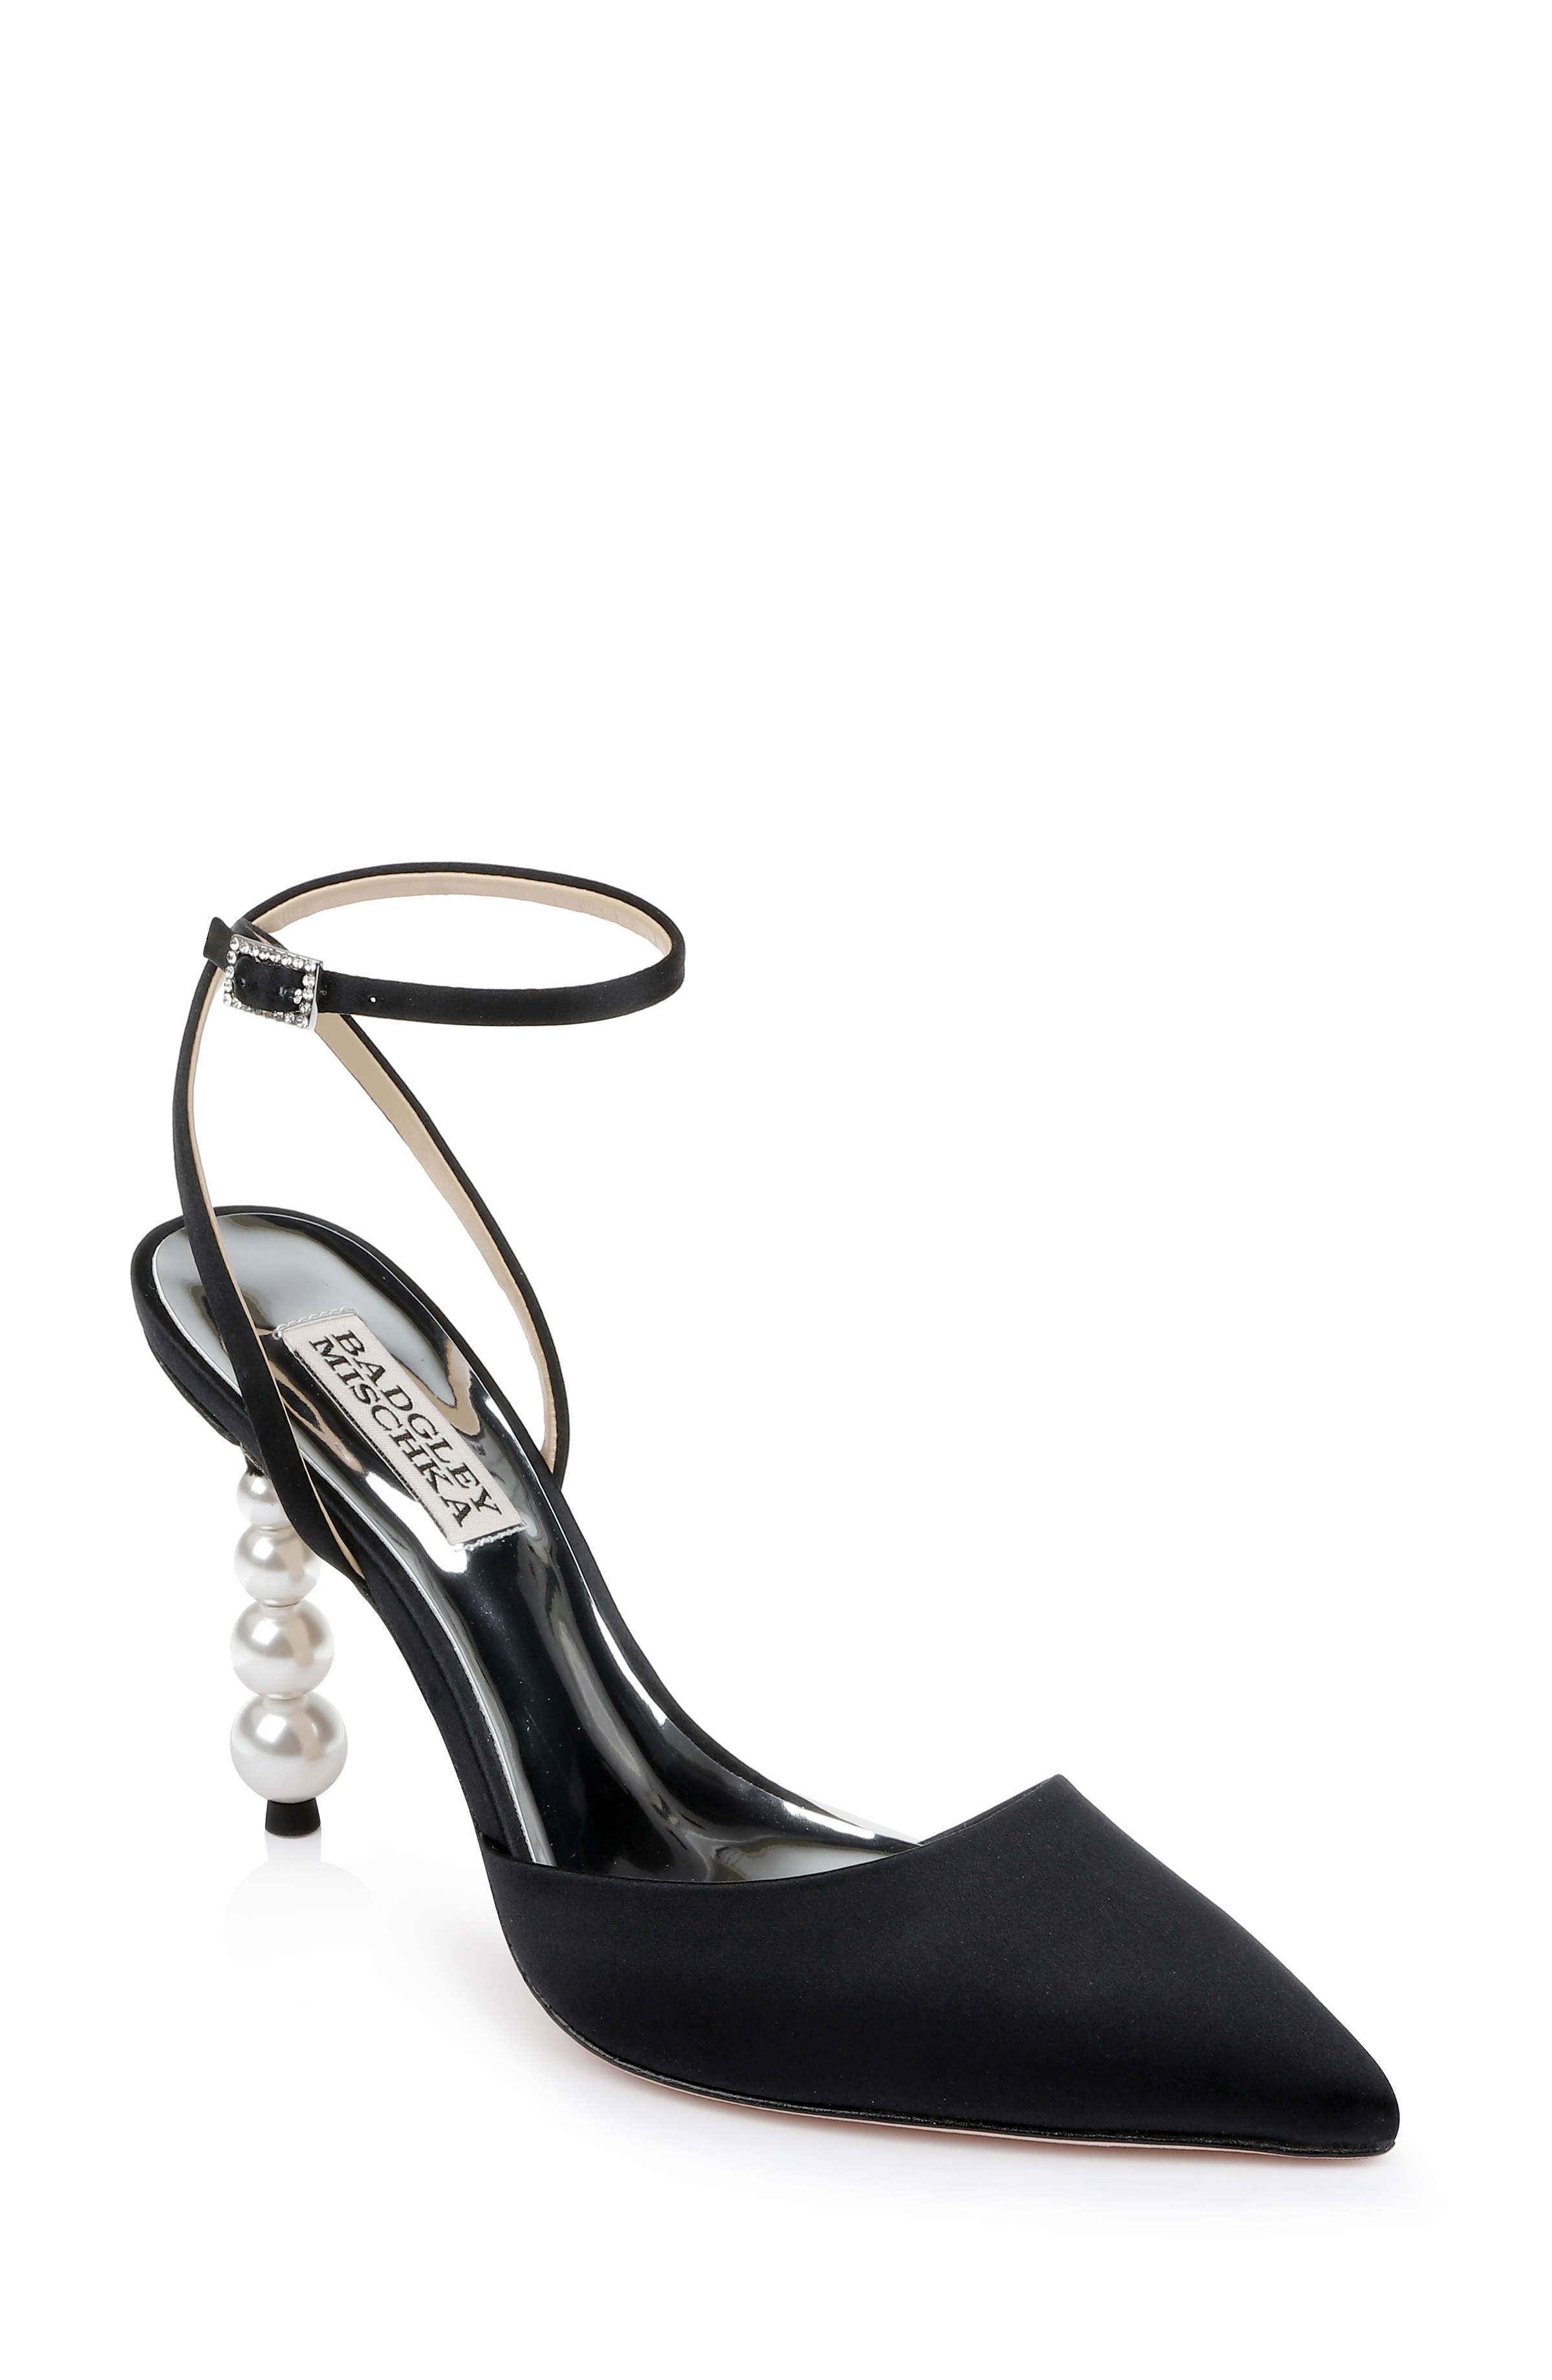 Aquazzura Sunshine 105 pumps for Women - Black in UAE | Level Shoes | Pumps,  Aquazzura, Womens stilettos